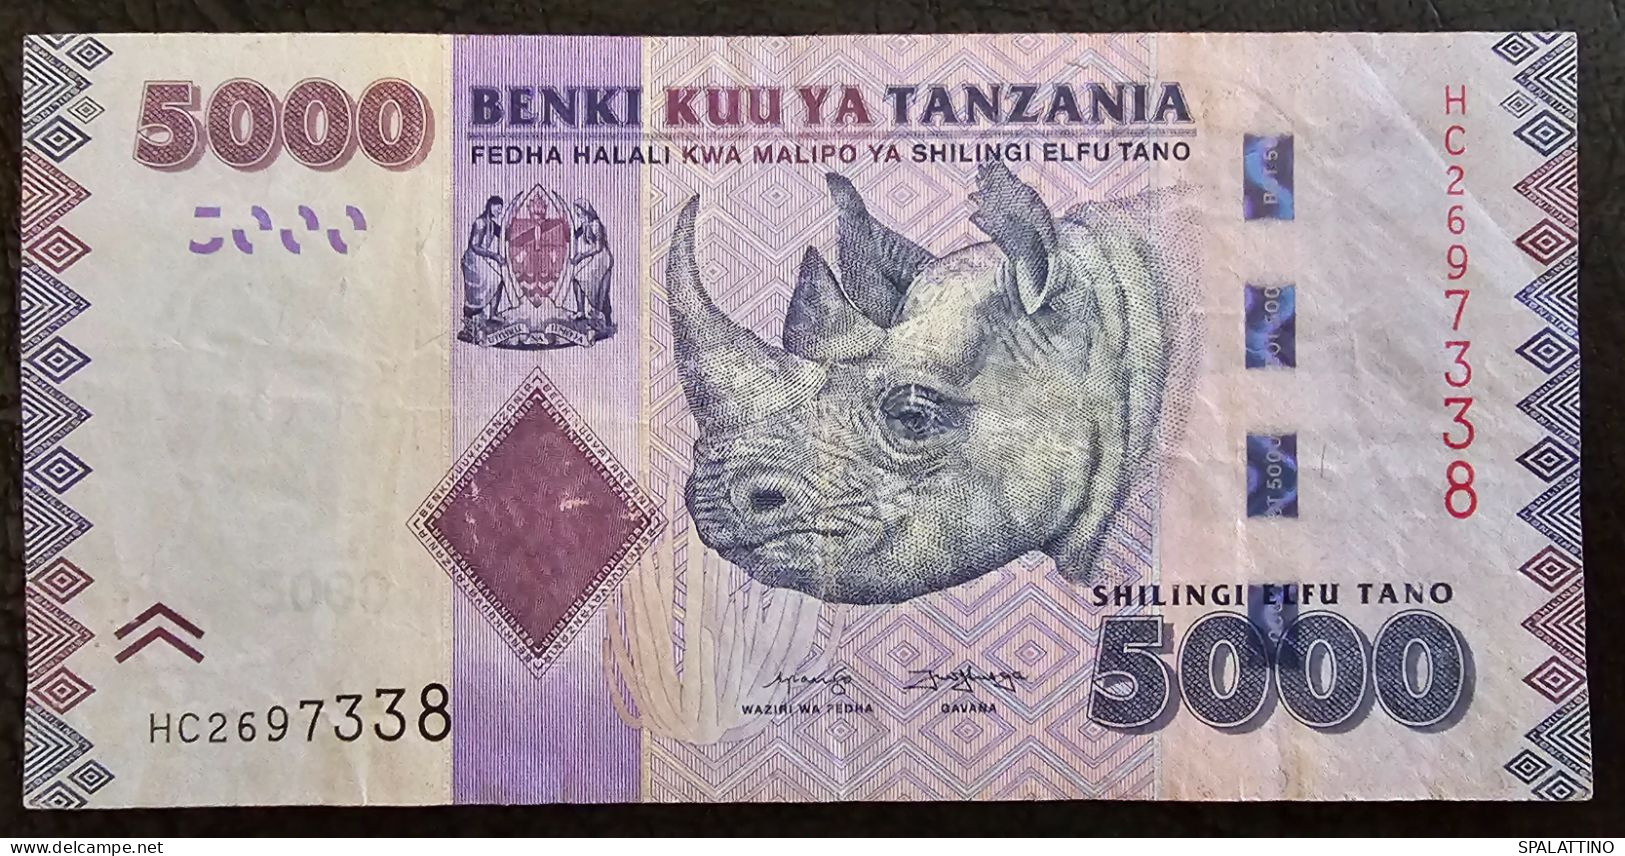 TANZANIA- 5000 SHILLINGS (2010- 2020) - Tansania